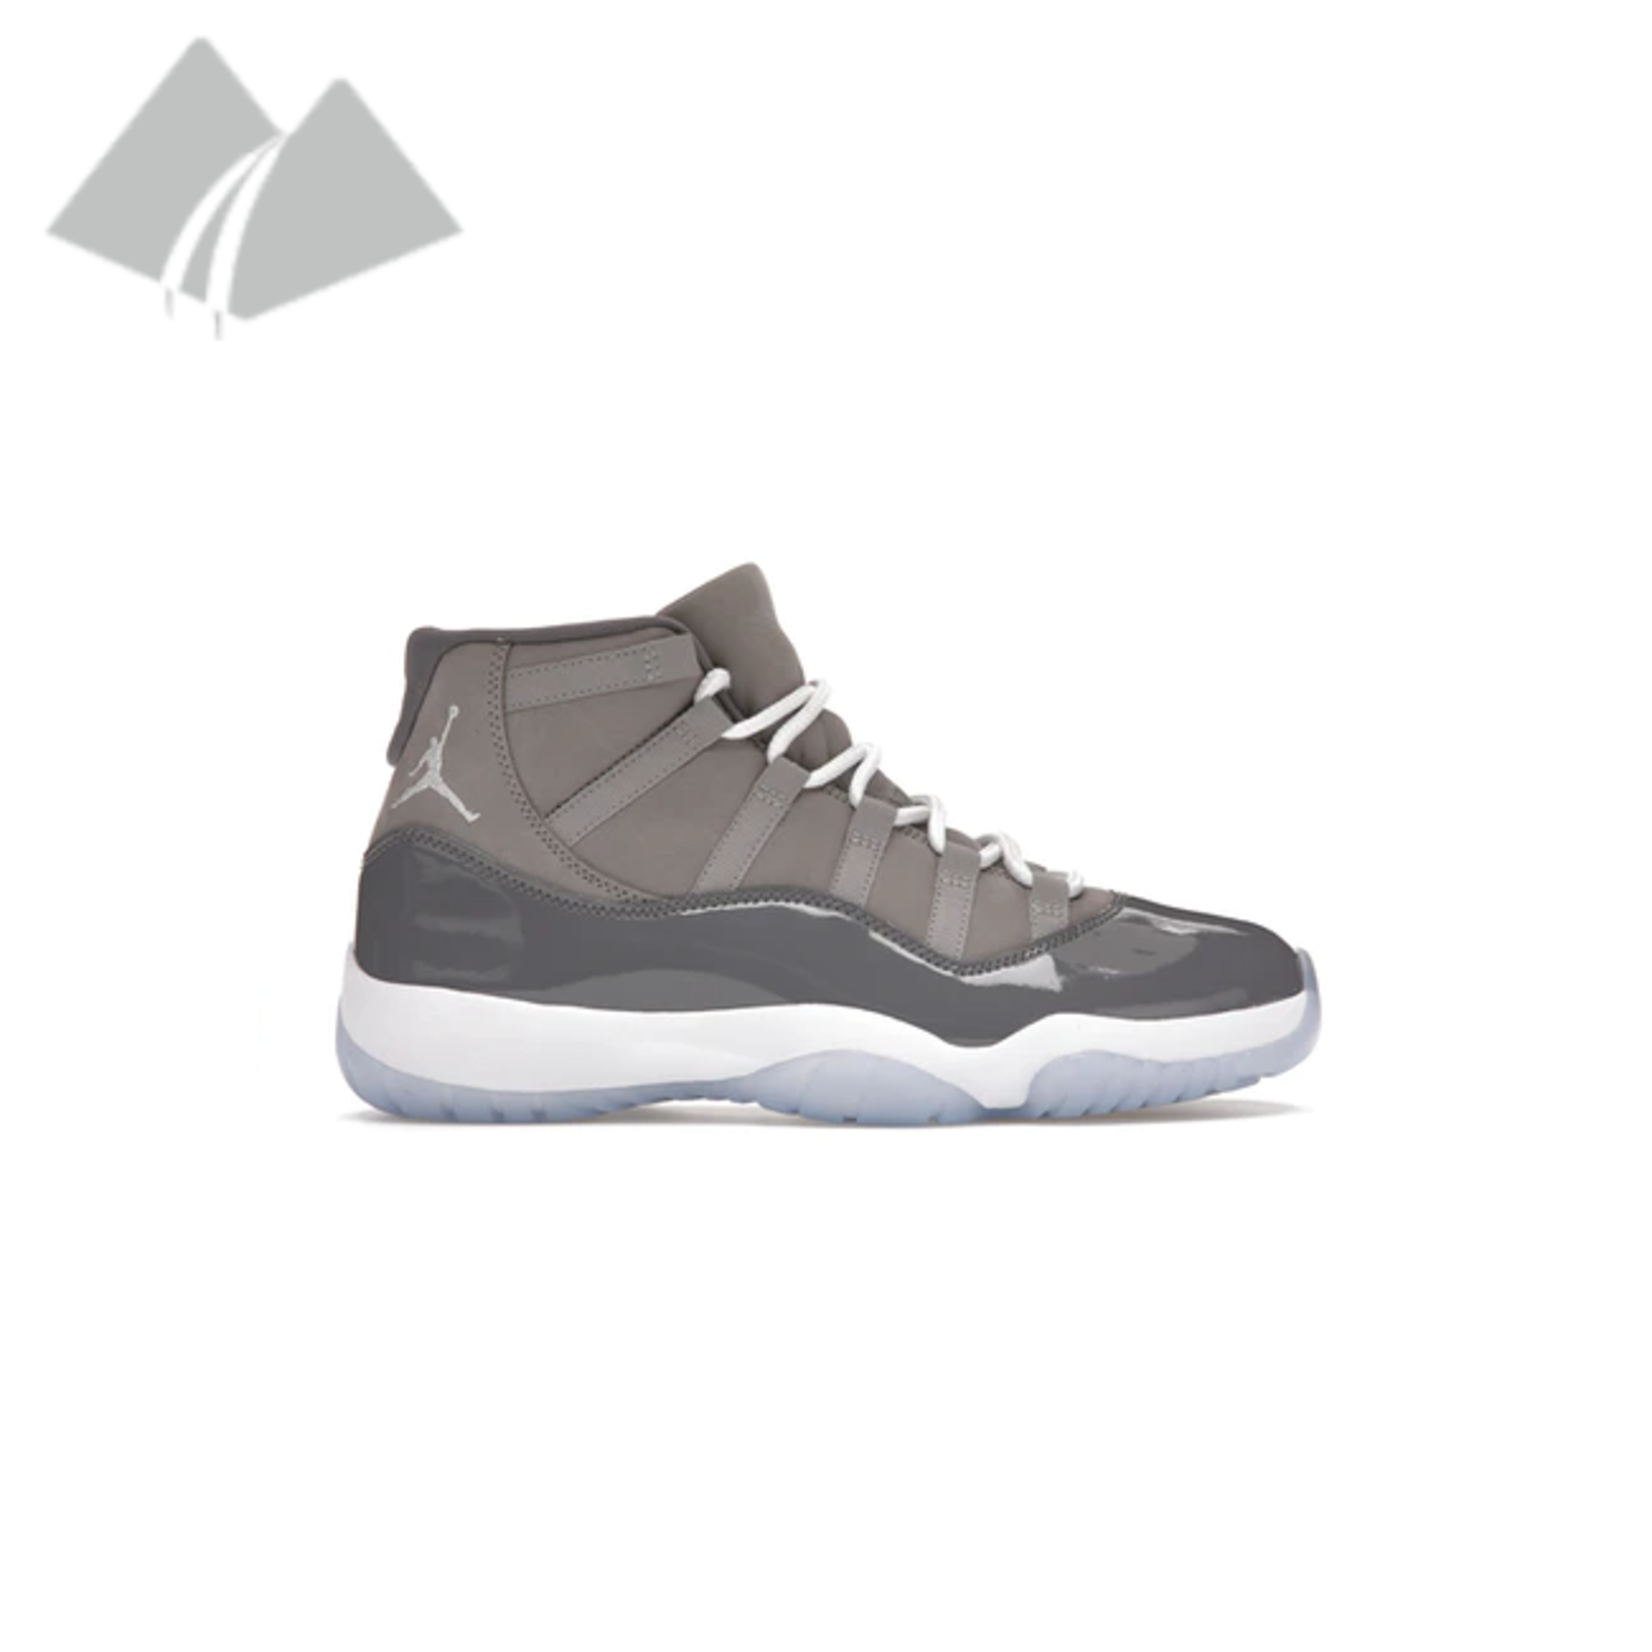 Jordan Jordan 11 (M) Cool Grey (2021)